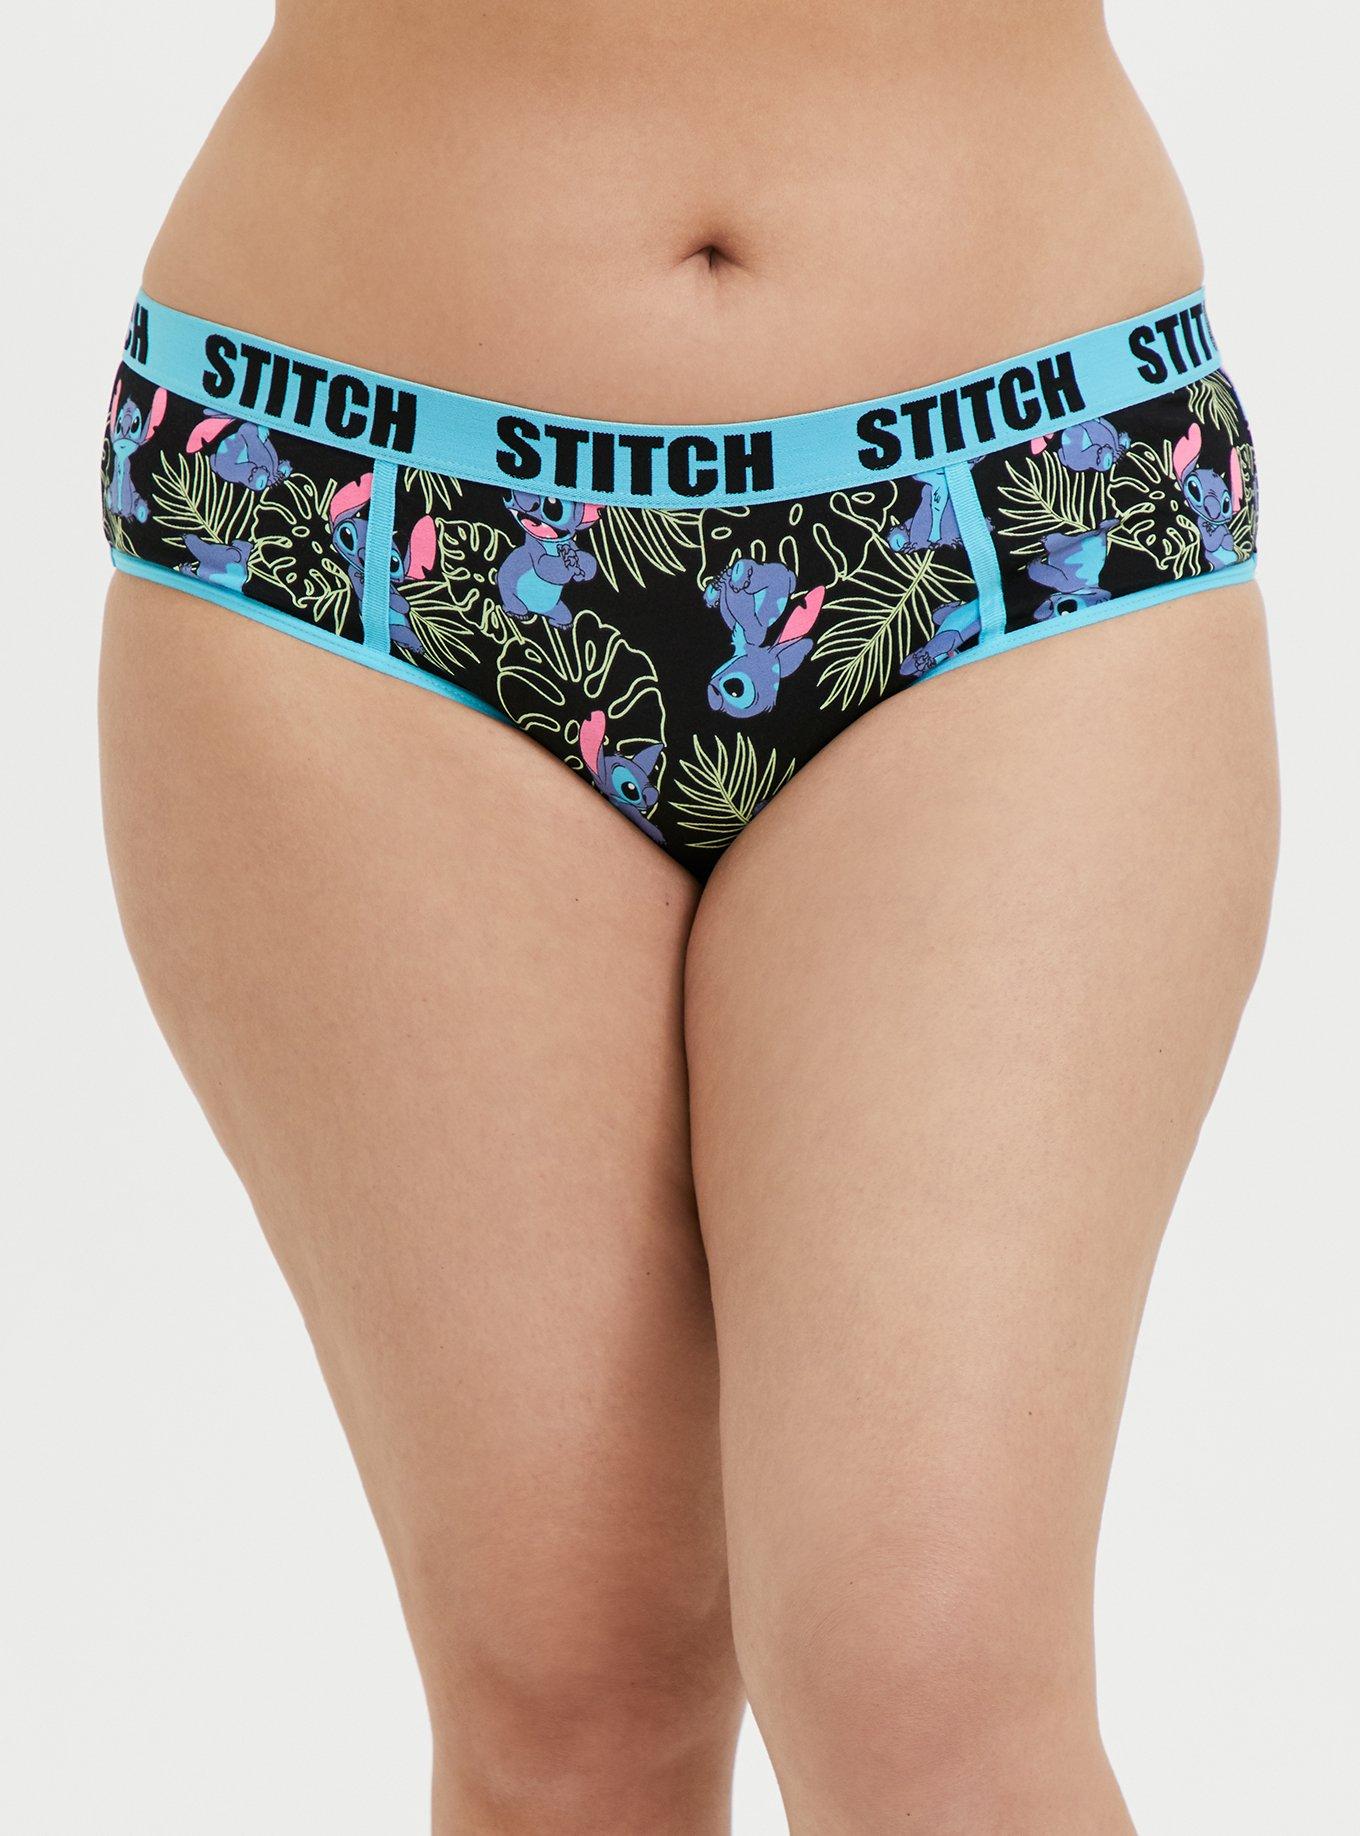 Disney Stitch Kawaii Panties Cotton Women Comfortable Cartoon Low Waist  Lingerie Sexy Cute Breathable Female Panty